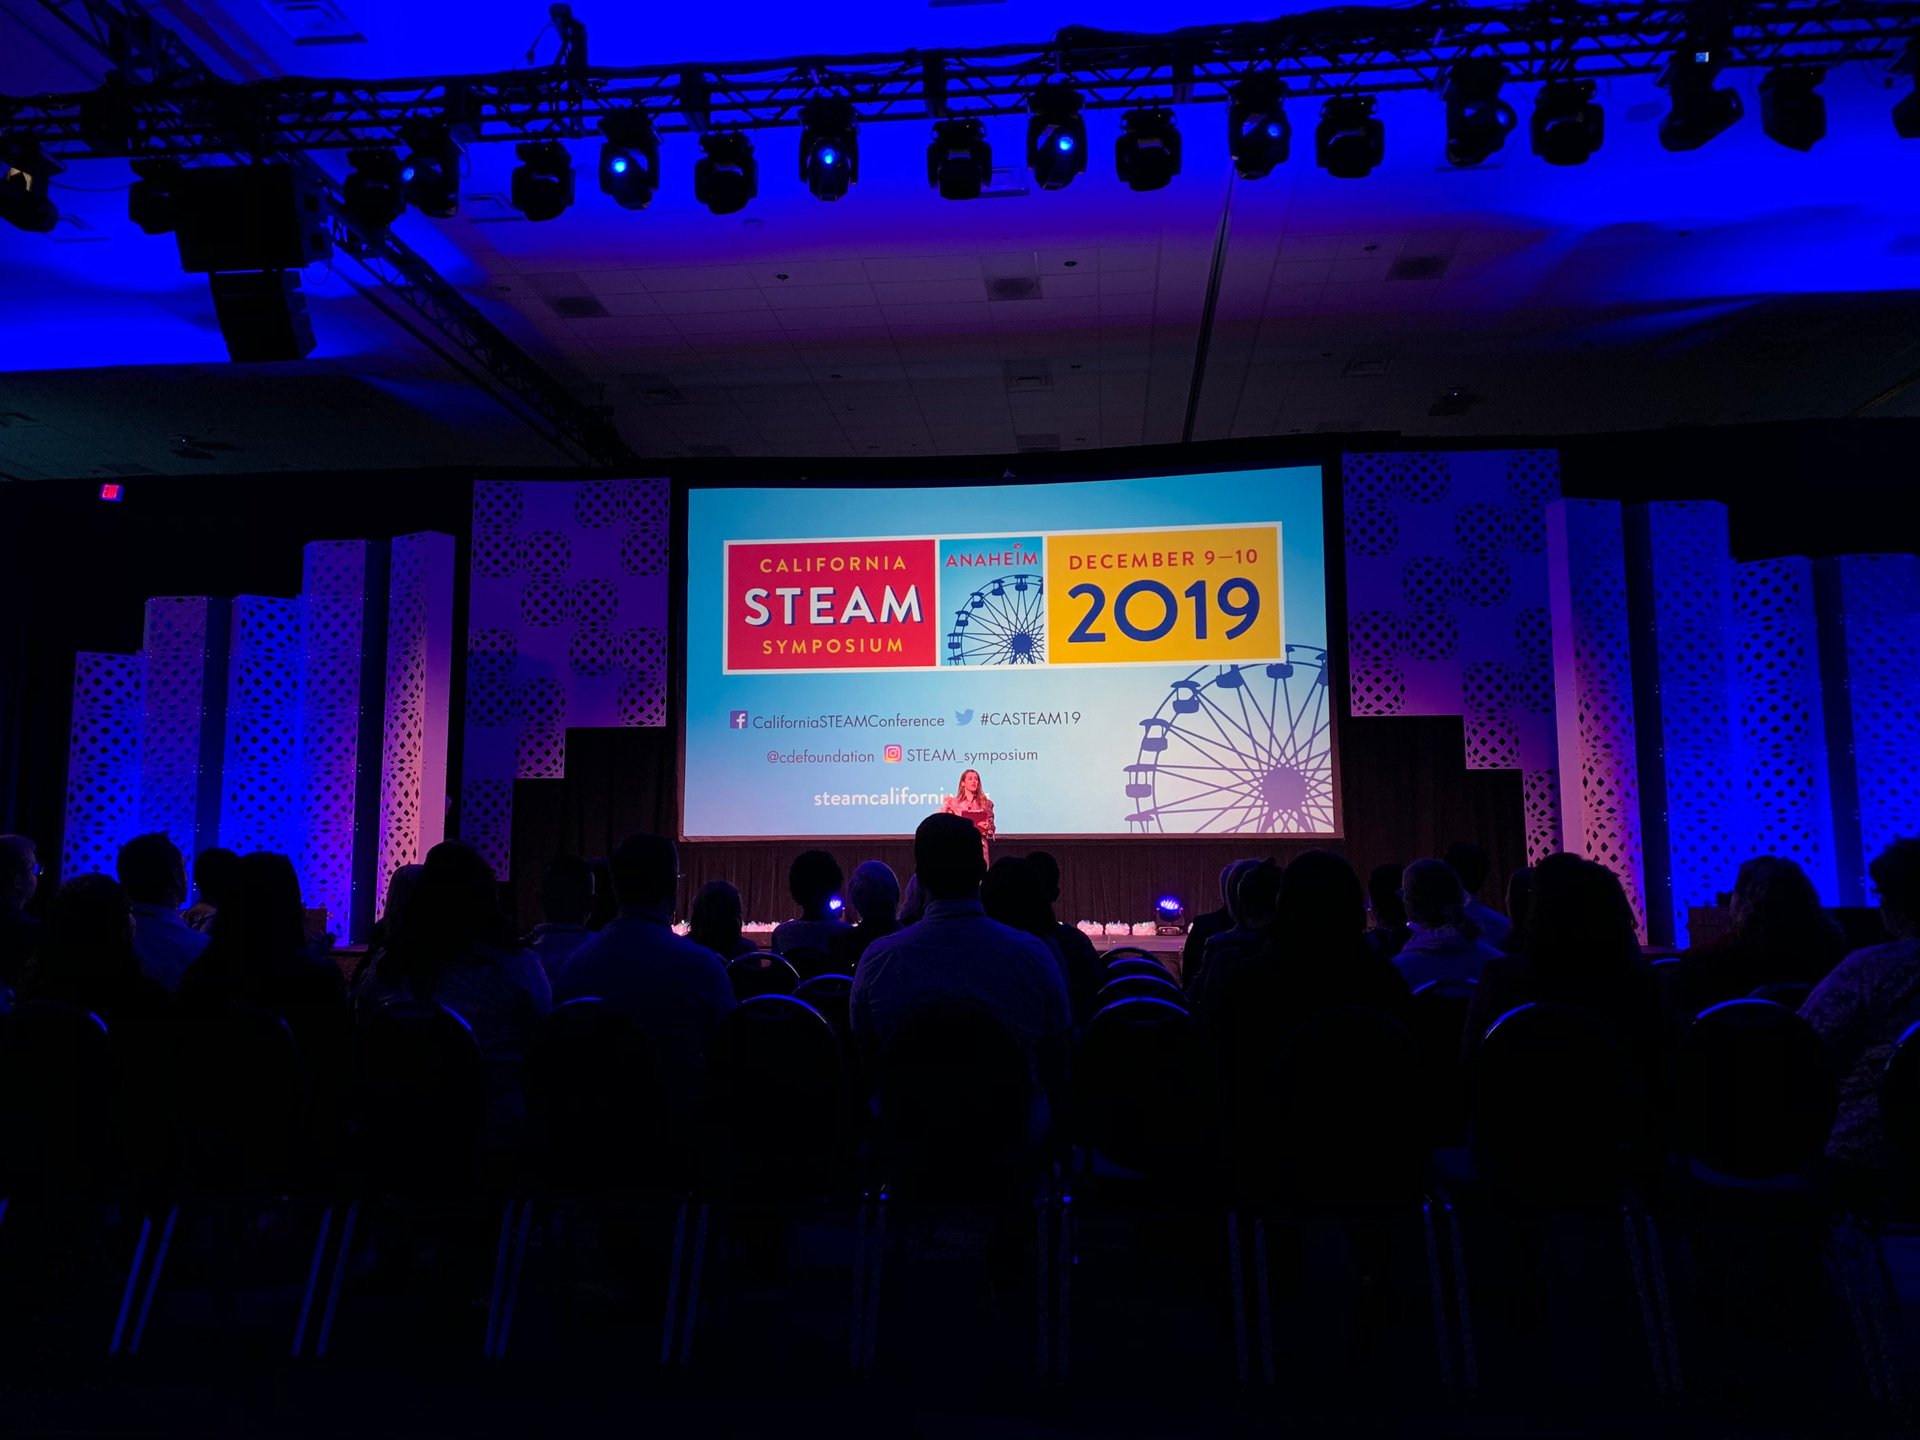 California STEAM Symposium Conference / Summit in Anaheim, CA The